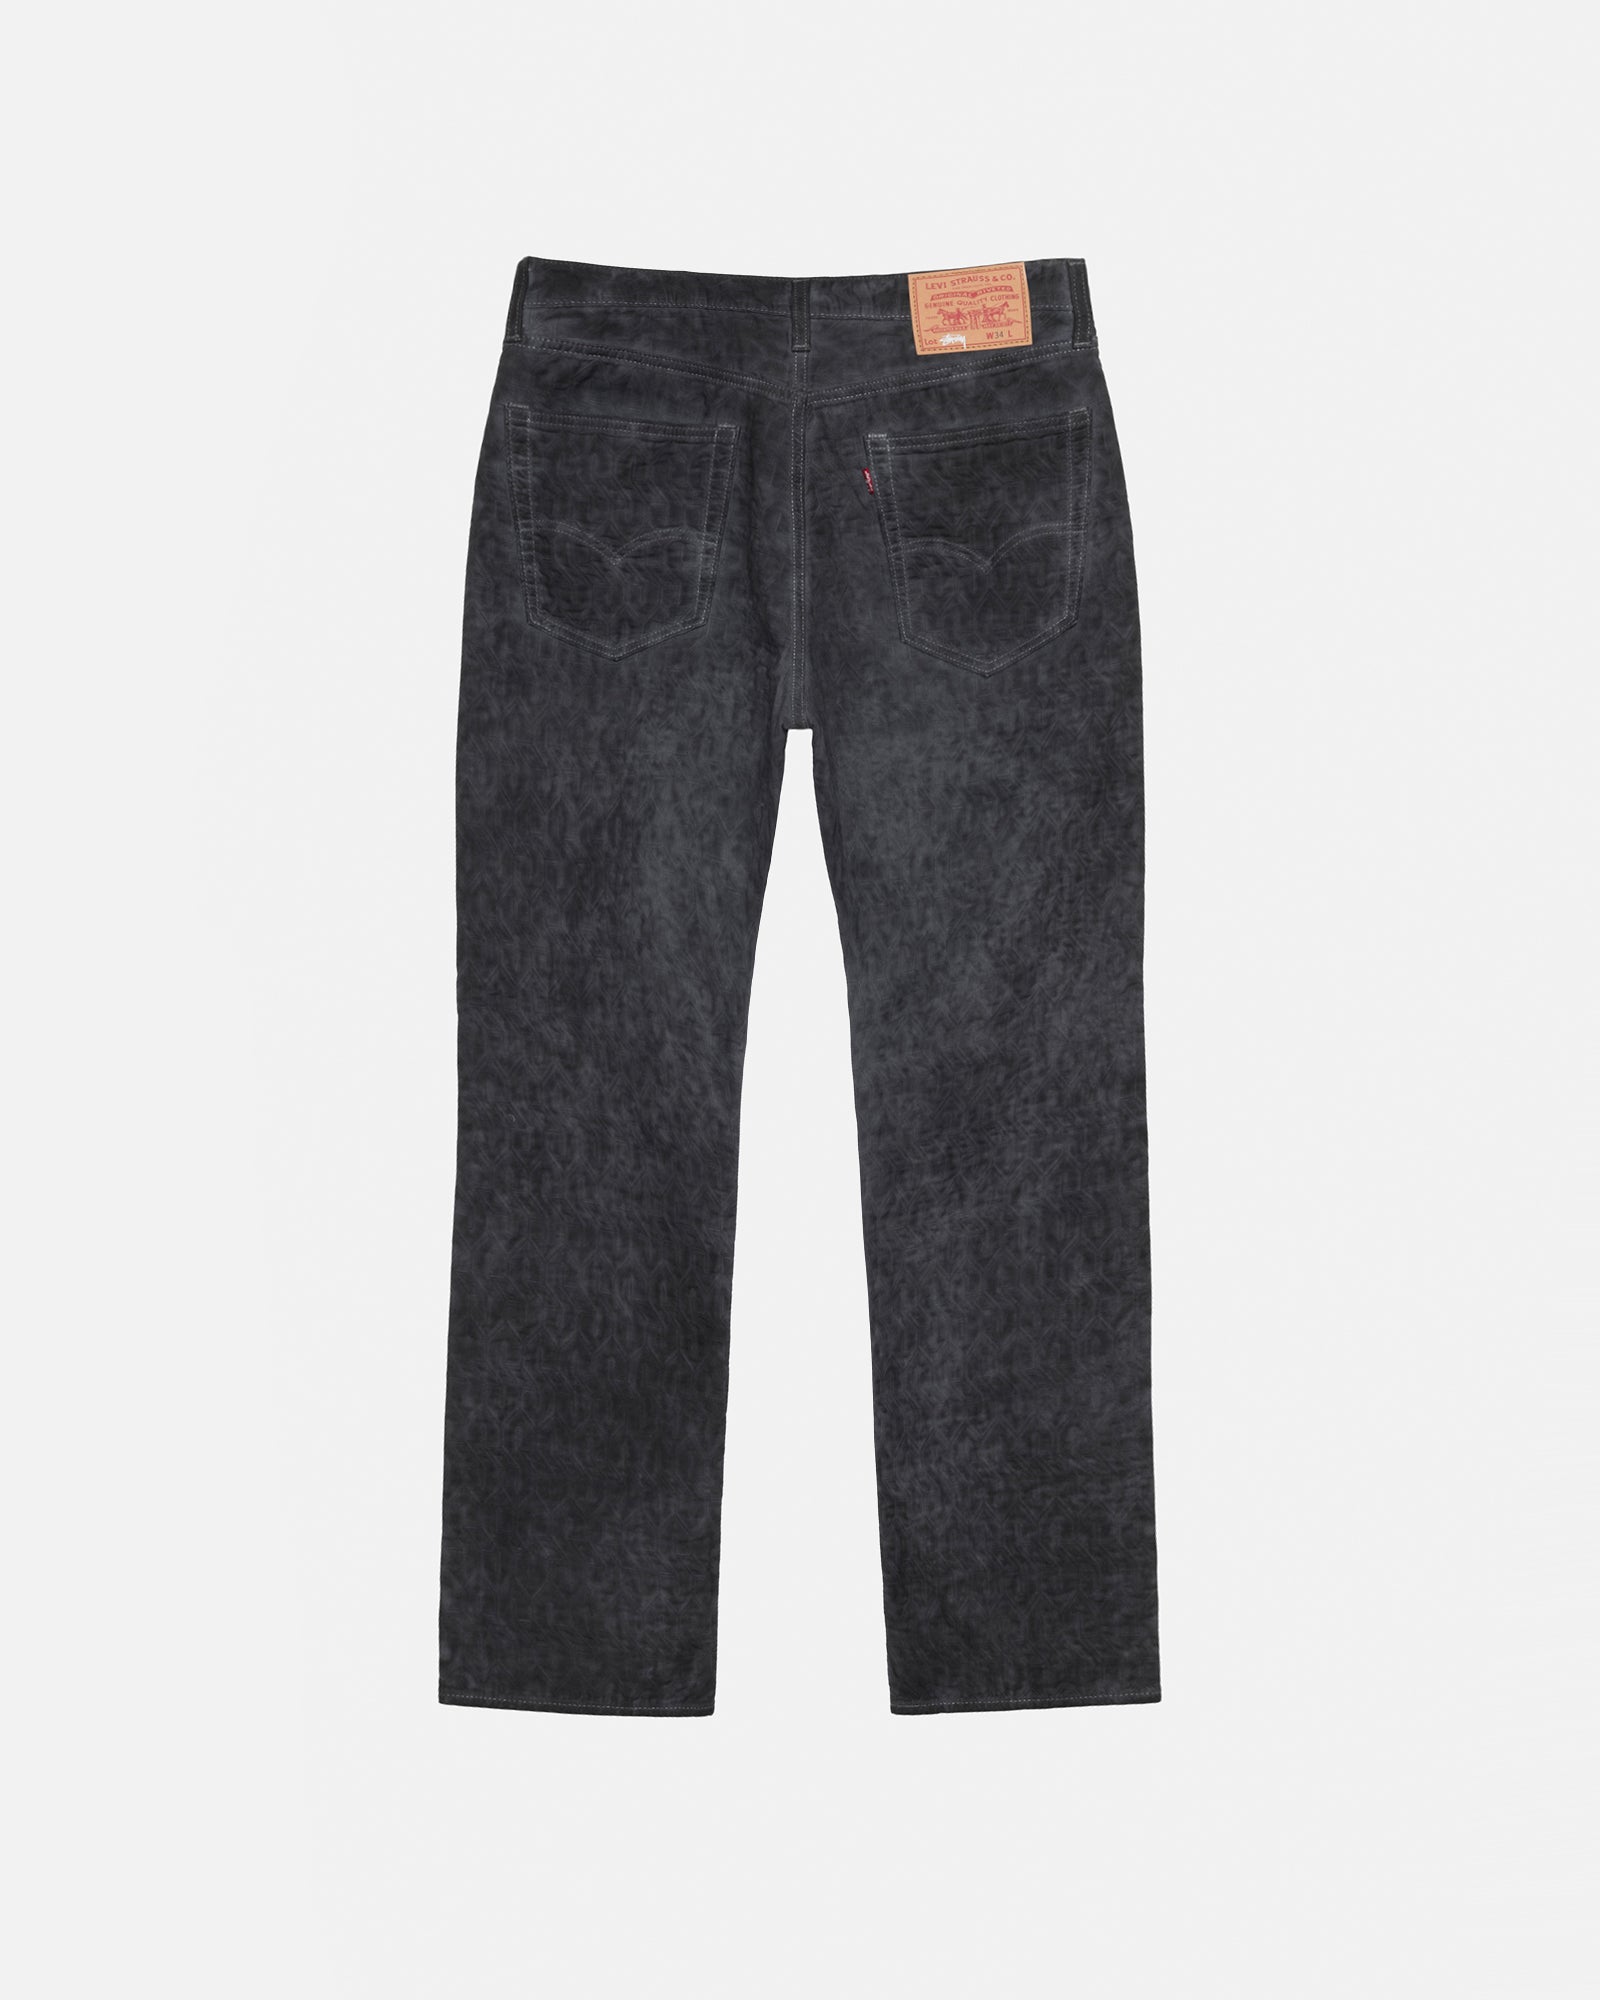 Stussy Levi's Dyed Jacquard Jeans Black